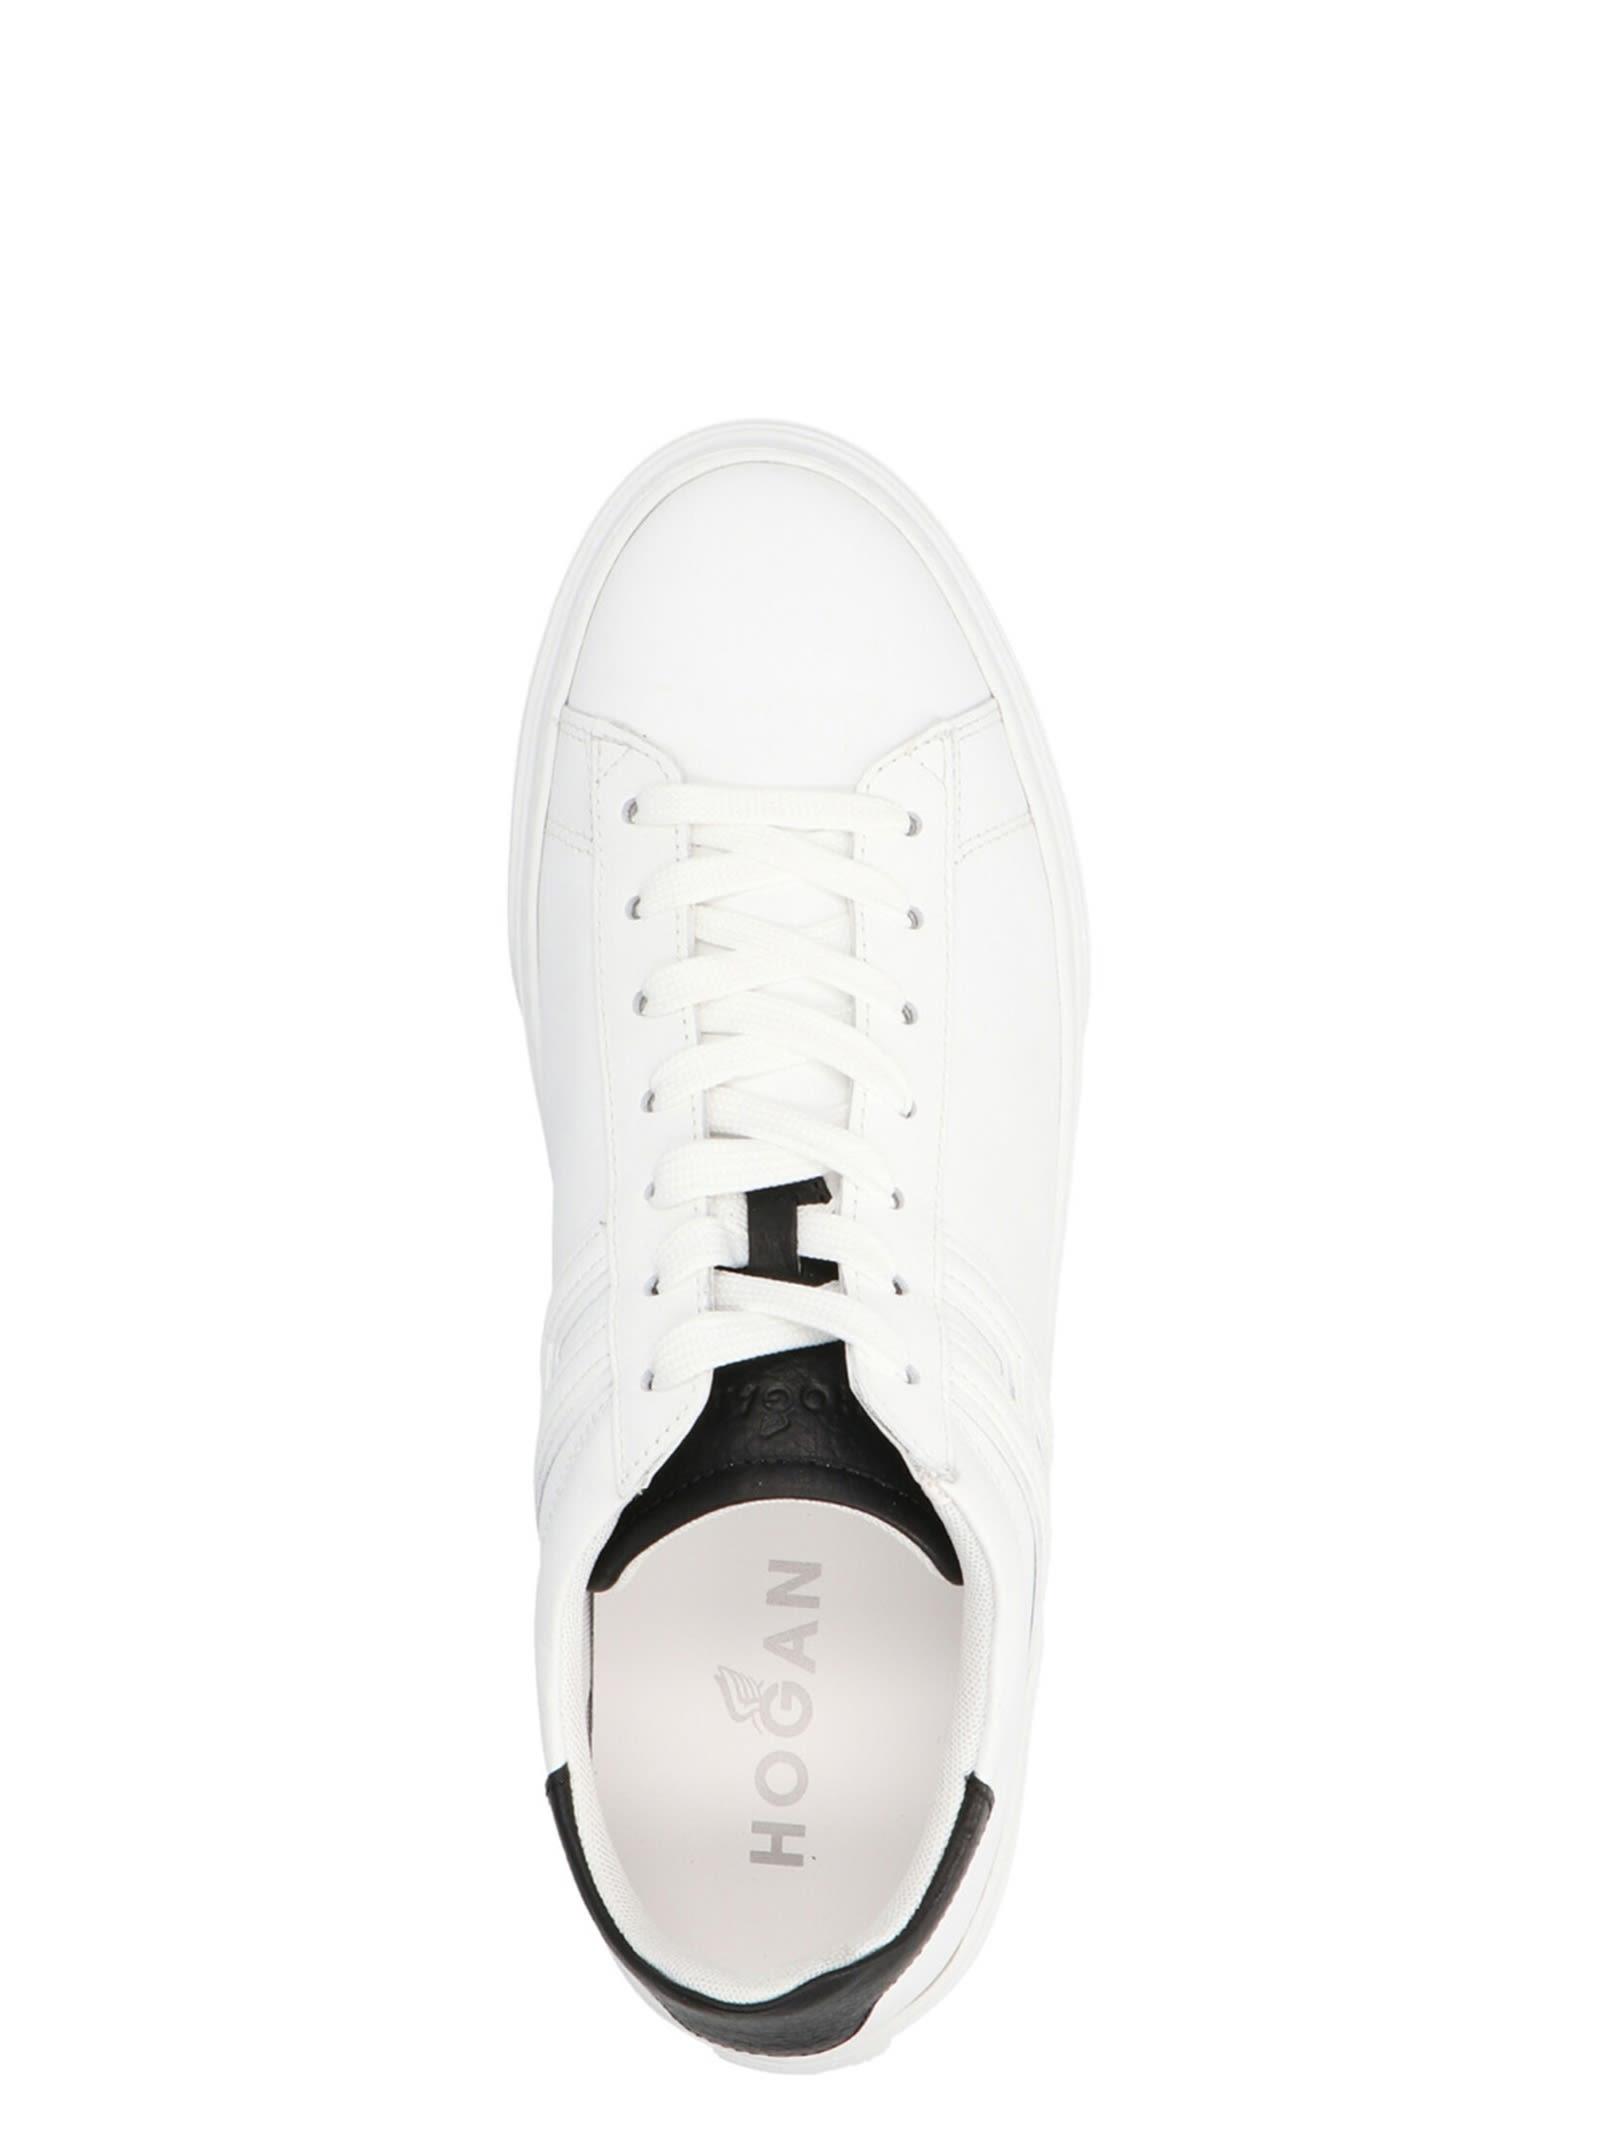 Hogan Man Flat Sneaker, Burgundy,White (Size 6.5)